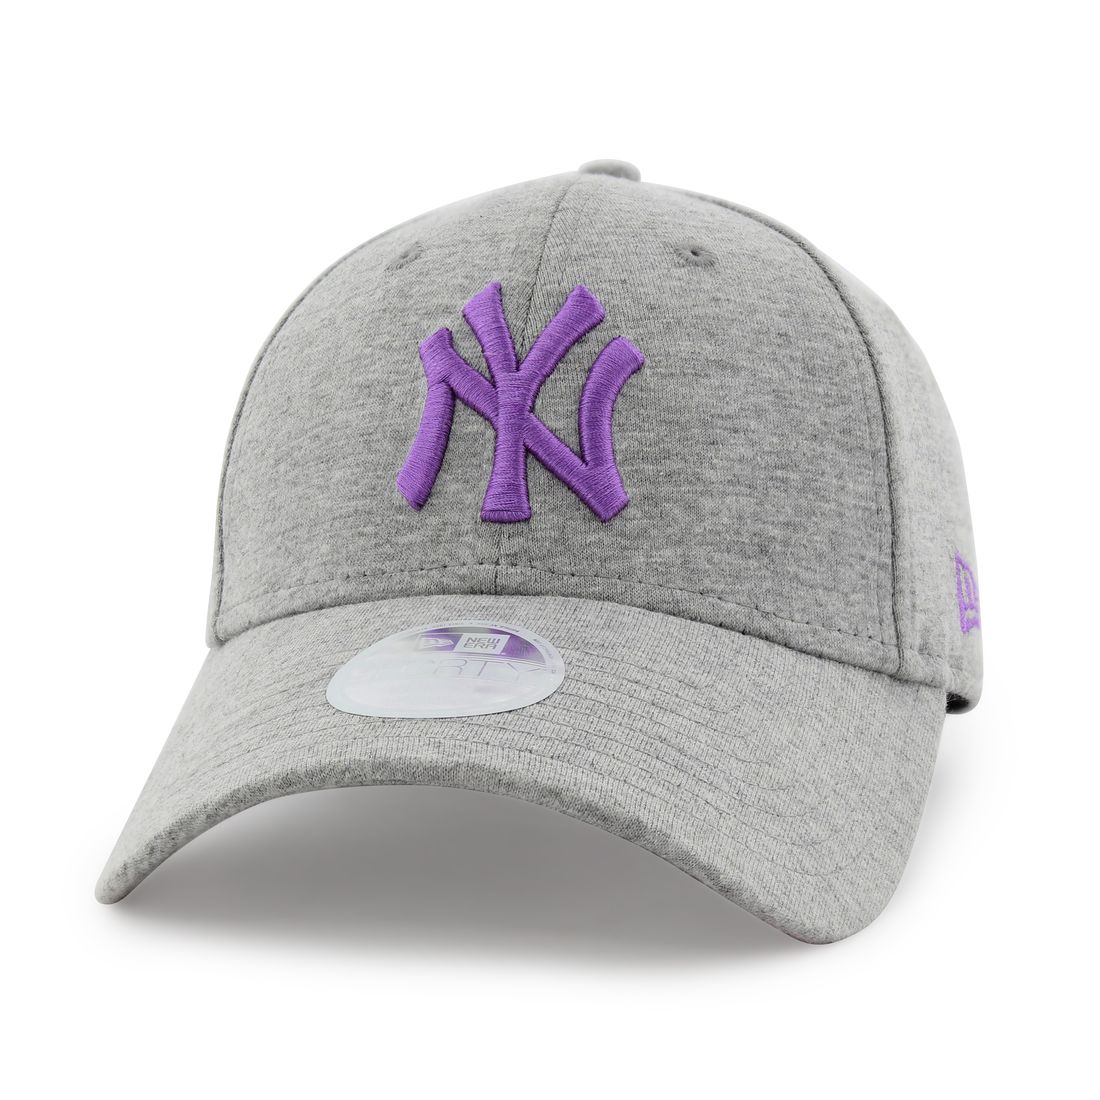 قبعة للنساء جيرسيه اسنشيال لفريق يانكيز نيويورك من نيو إيرا